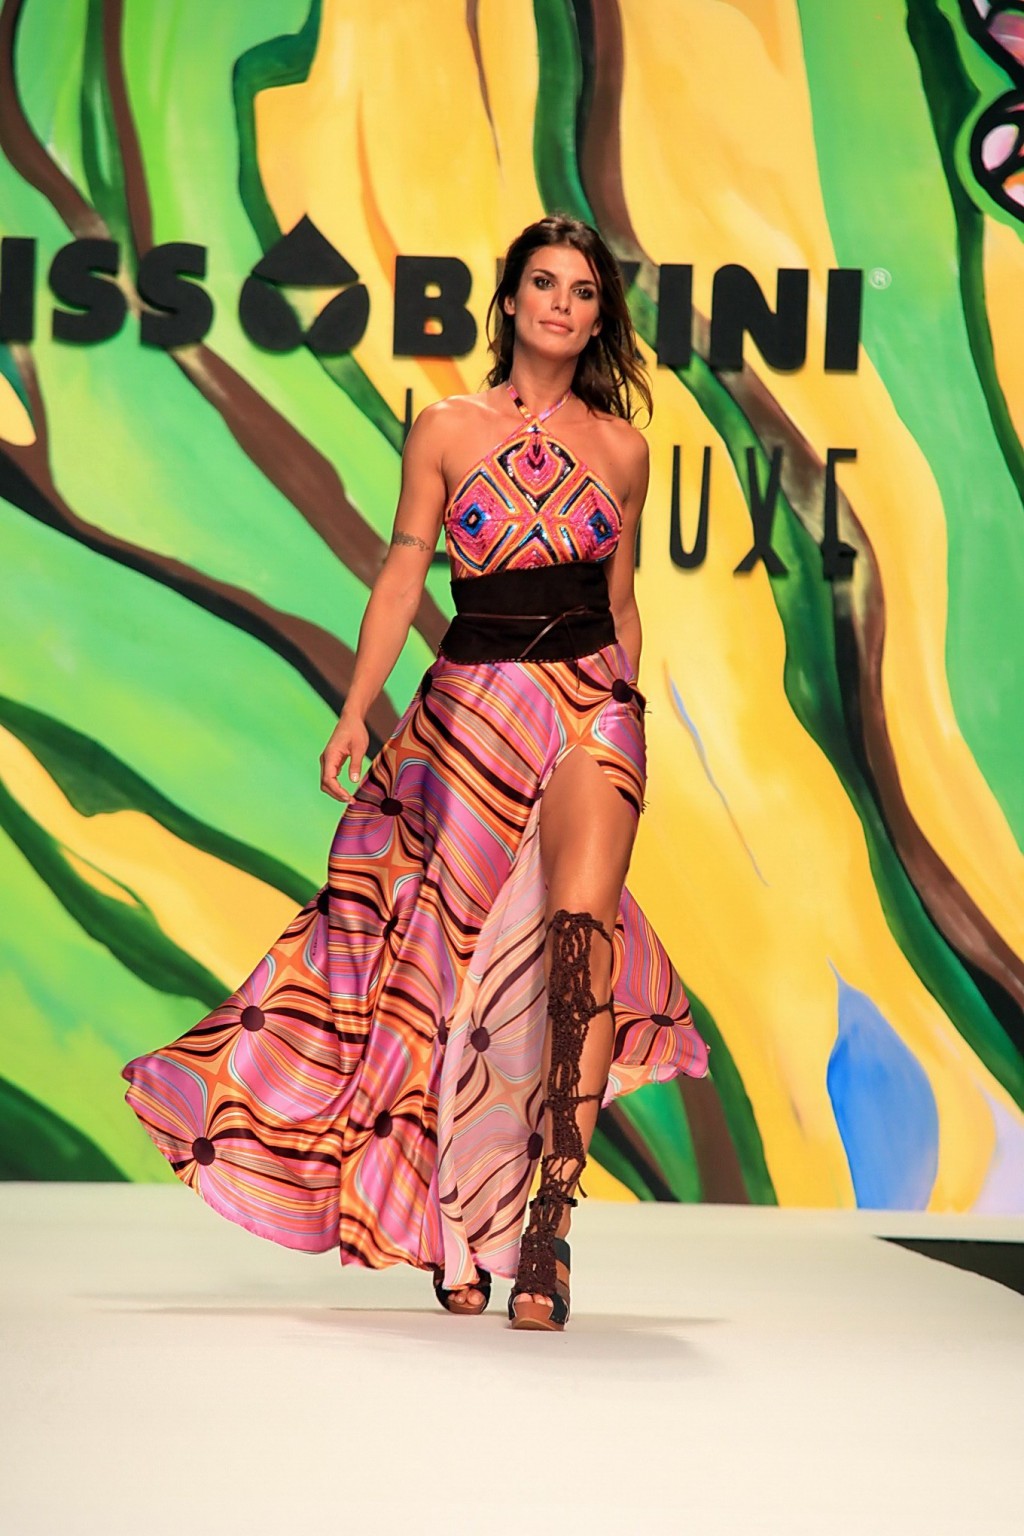 Elisabetta Canalis showing off her hot curvy body at Miss Bikini fashion show in #75252184